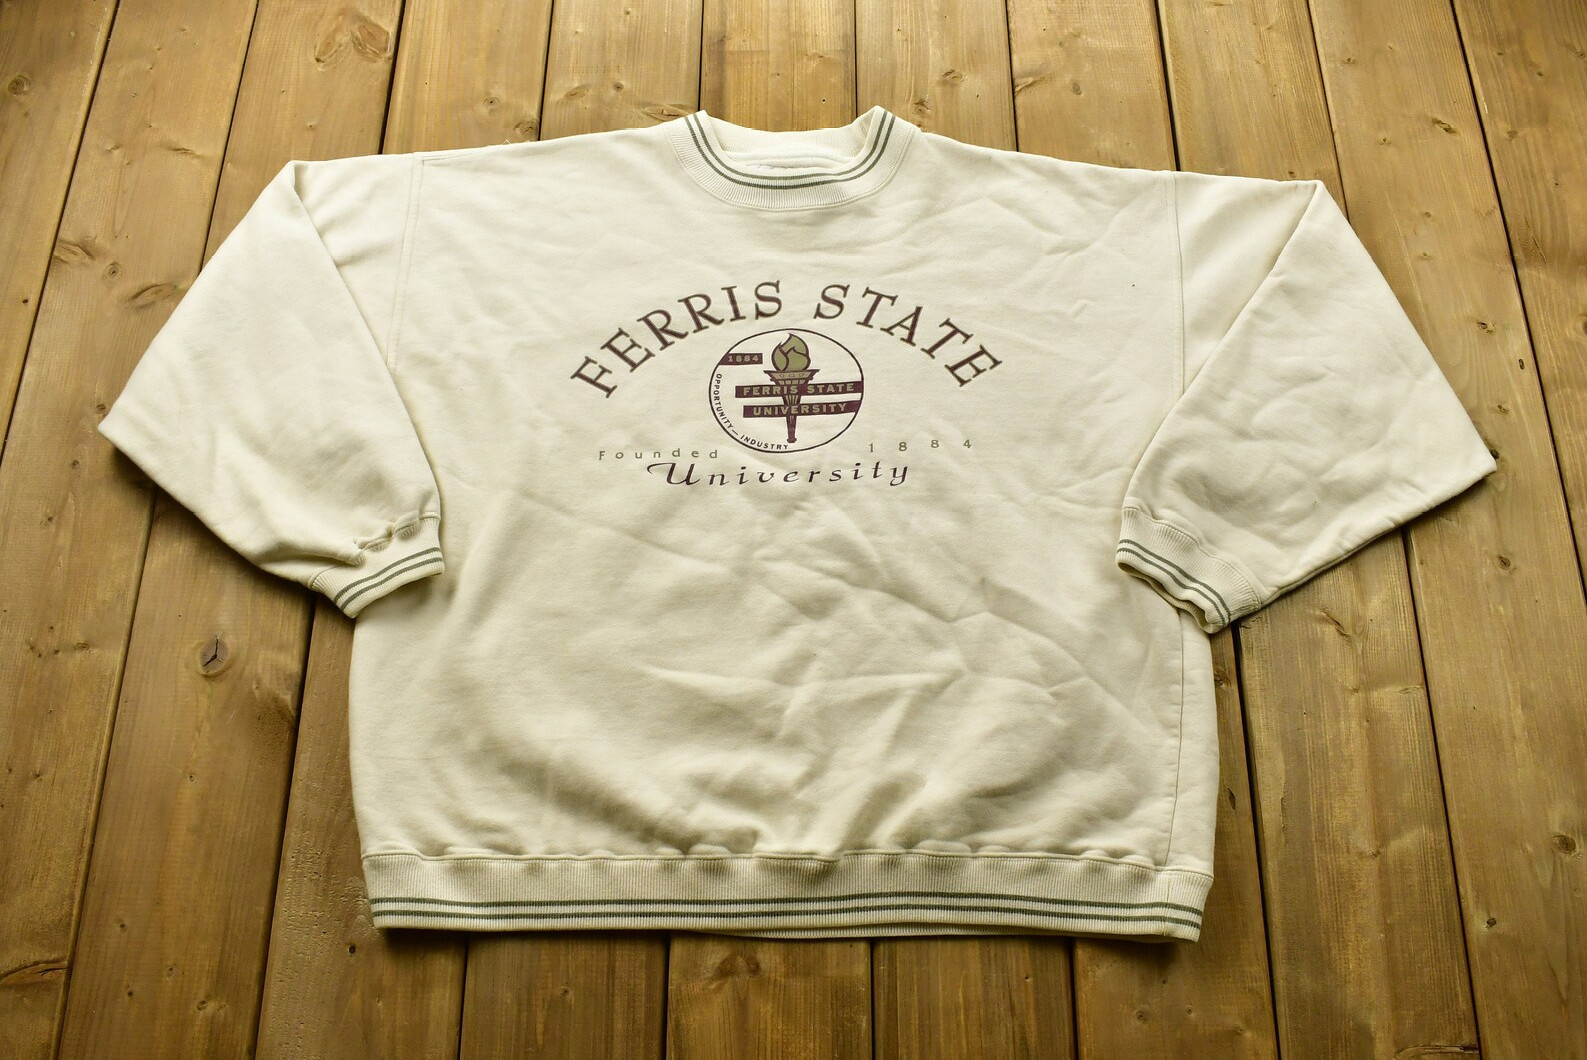 Vintage 1990s University Of Ferris State Collegiate Crewneck  Americana  Sportswear  Athleisure